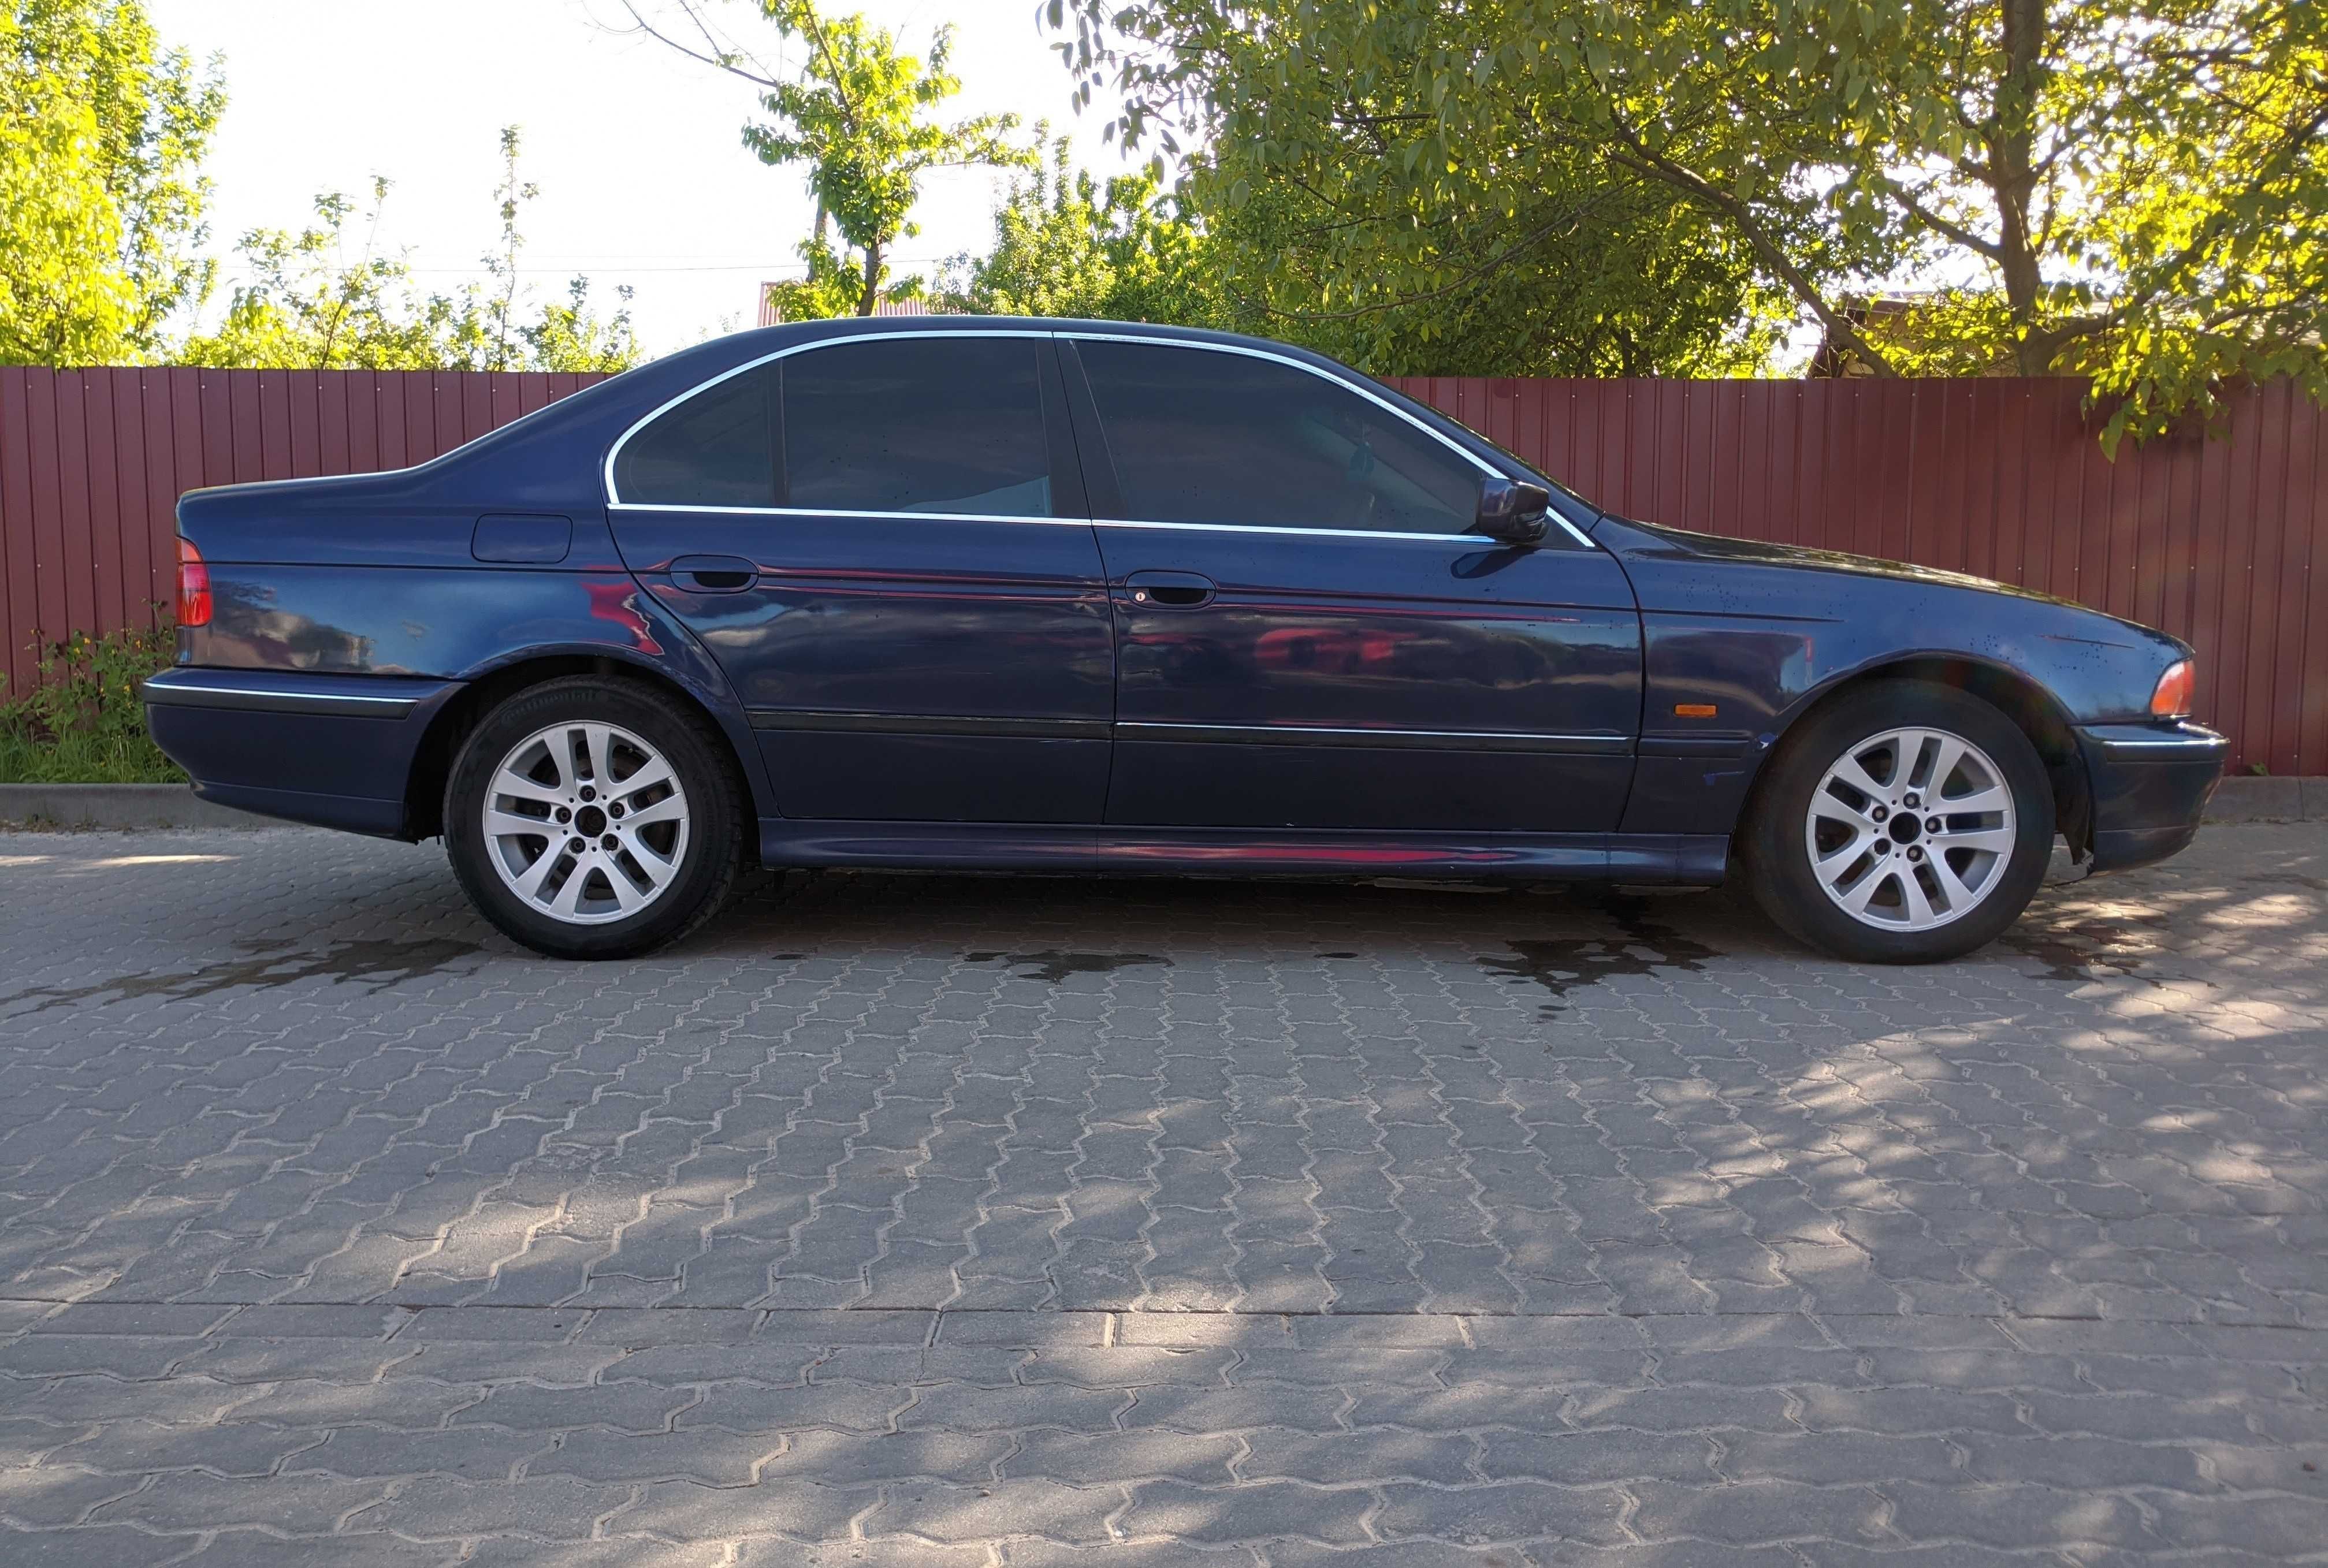 BMW E39 520I Бензин Львів